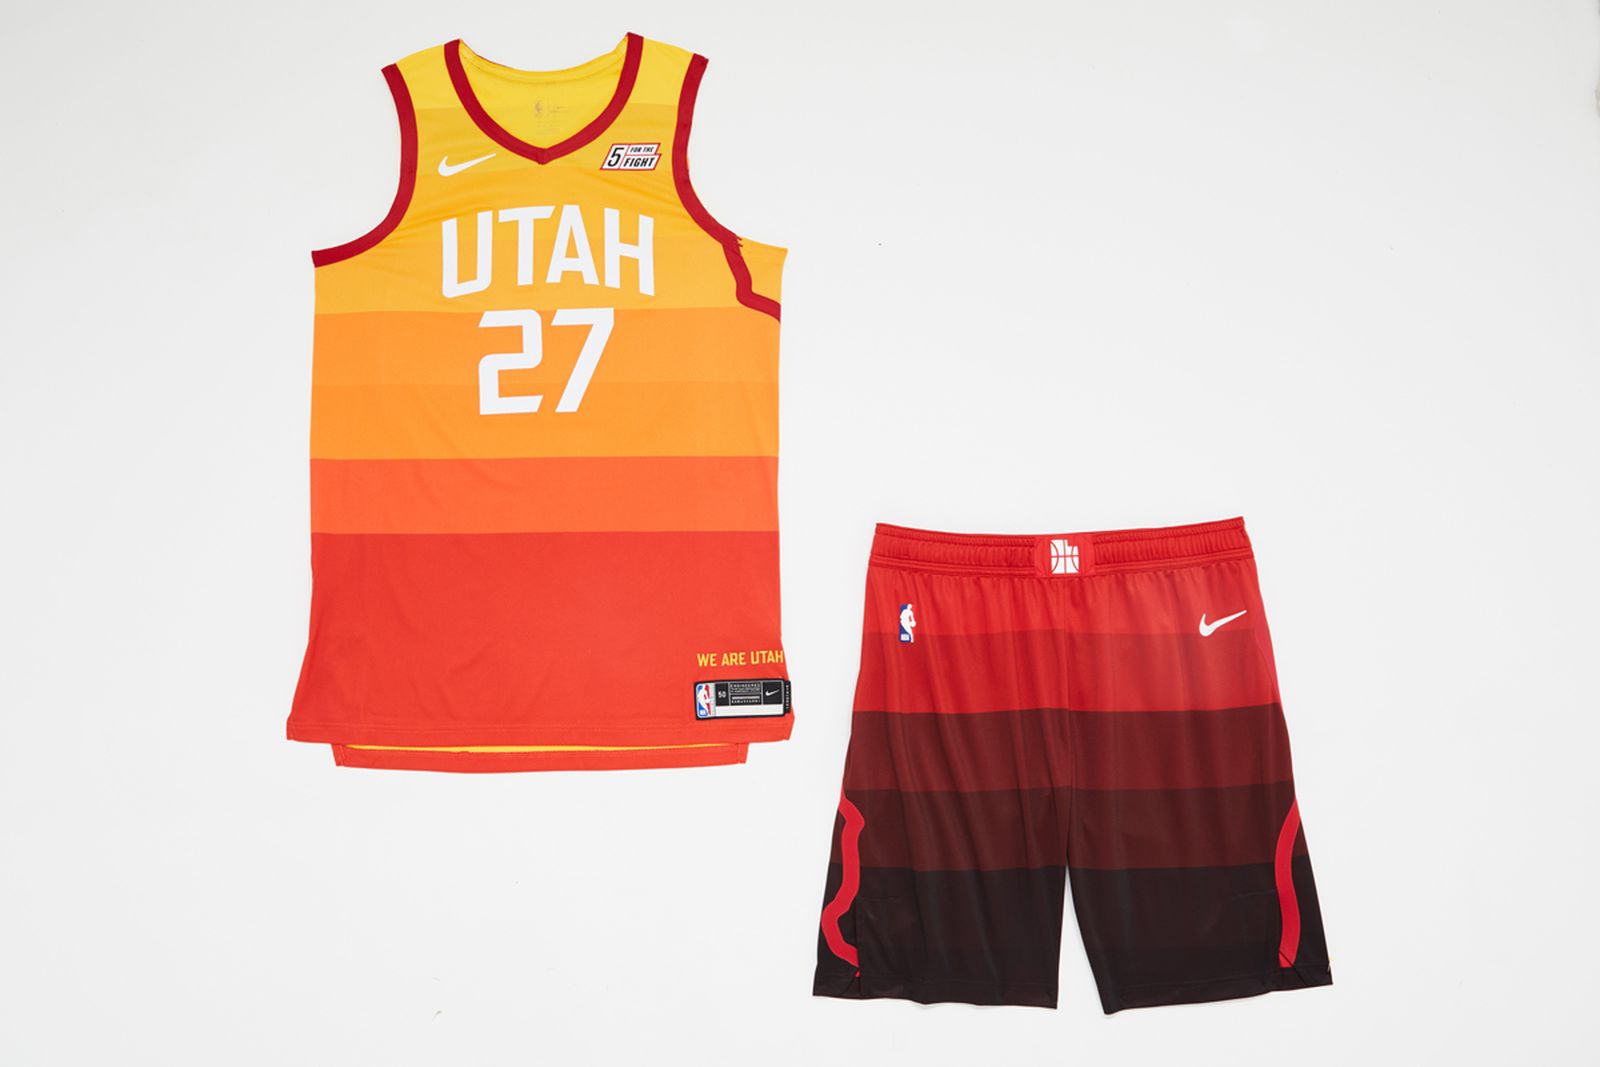 Nike Unveils 2019-20 NBA City Uniforms: Here